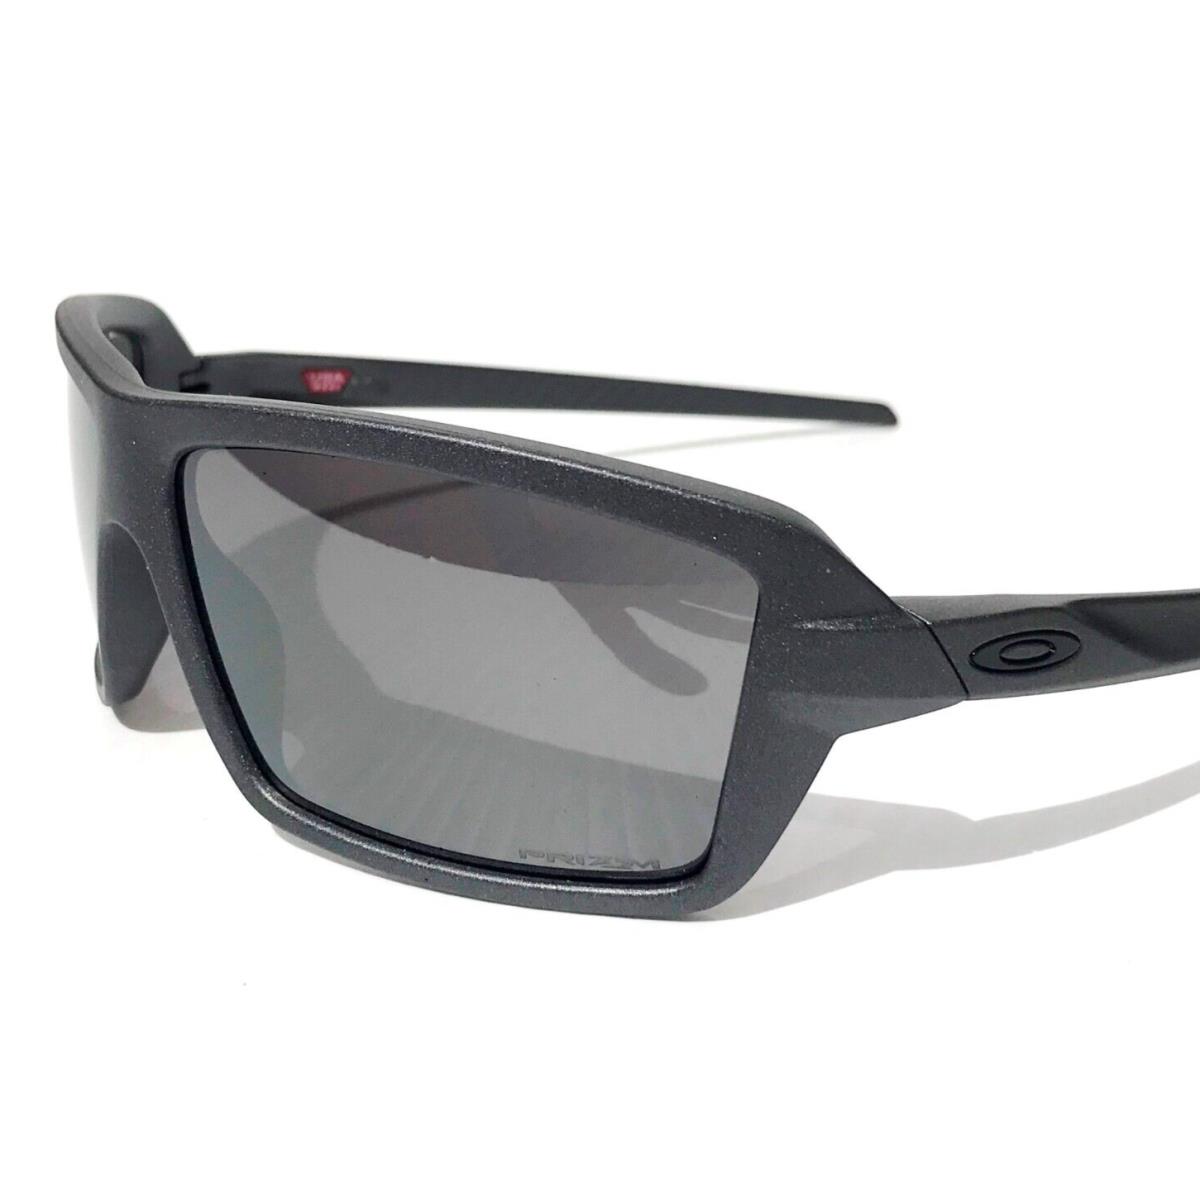 Oakley sunglasses Cables - Grey Frame, Black Lens